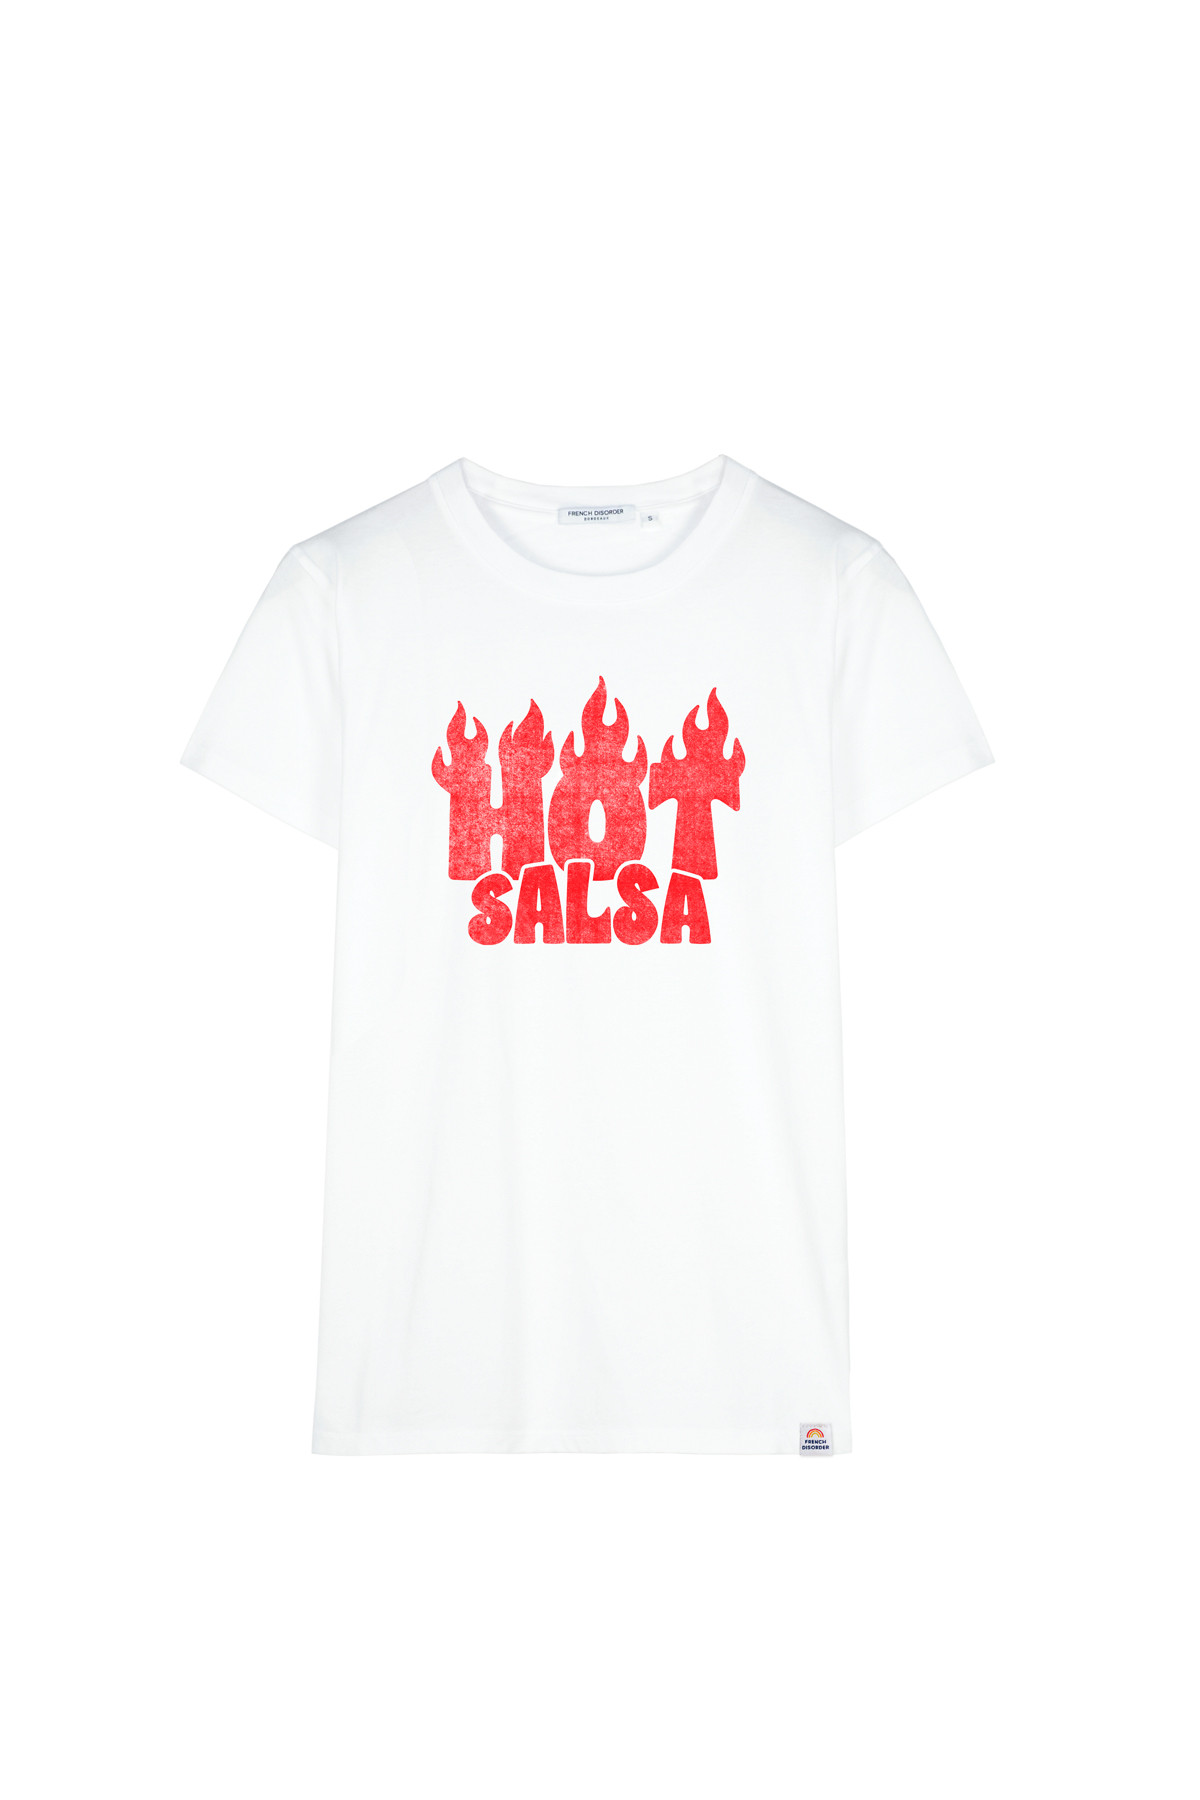 Tshirt HOT SALSA French Disorder